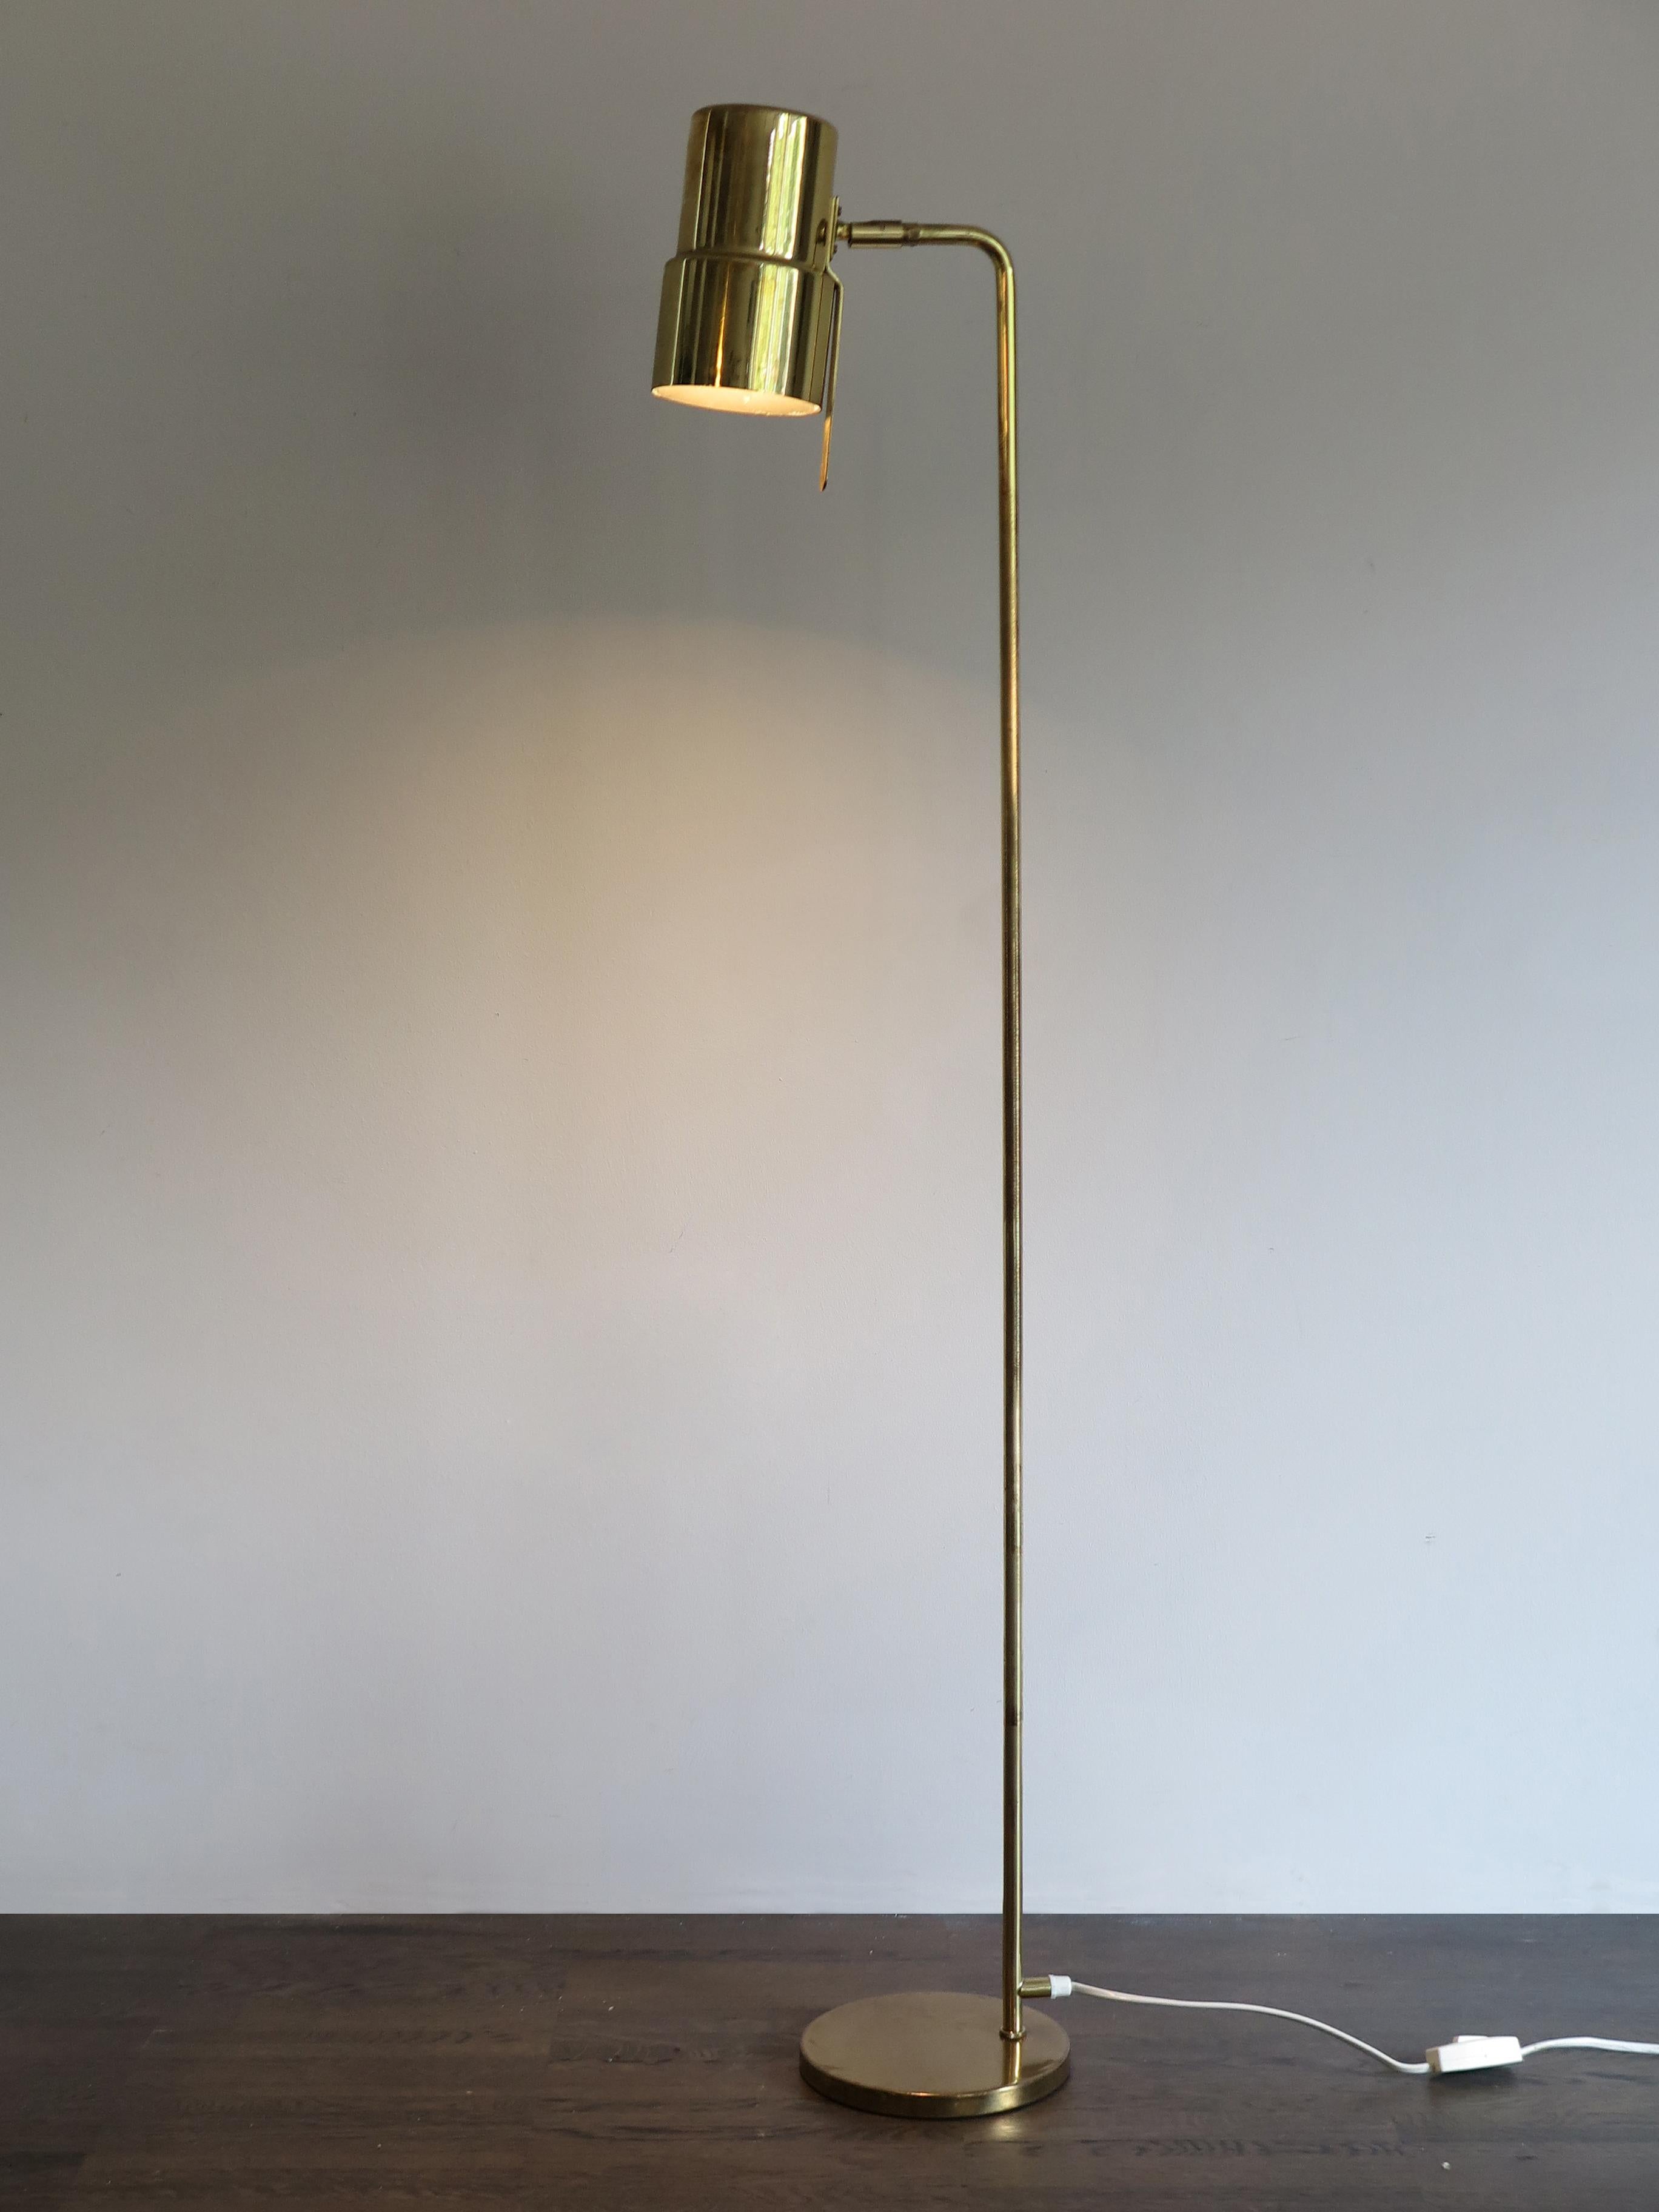 Scandinavian Mid-Century Modern design brass floor lamp model “G-154” designed by Swedish designer Hans Agne Jakbsson and produced by AB Markaryd Sweden with adjustable diffuser, 1950s.
Label of the designer and manufacturer under the